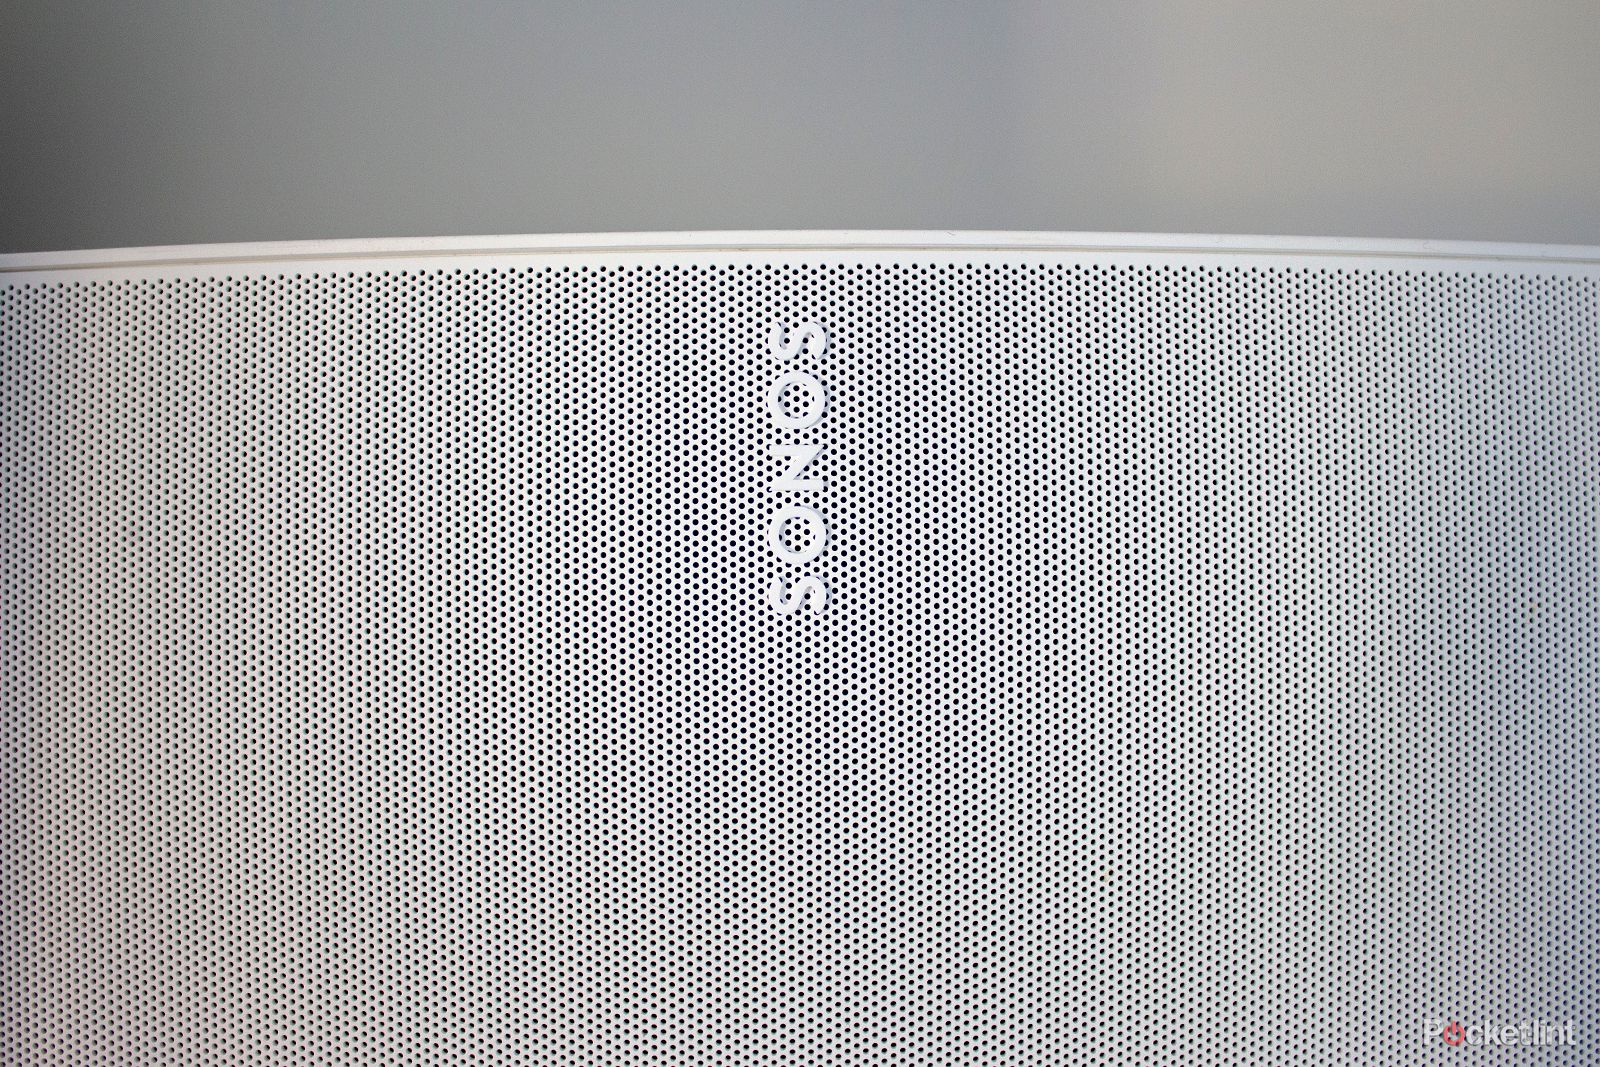 Sonos takes over RHA Audio: New headphones coming soon? photo 1